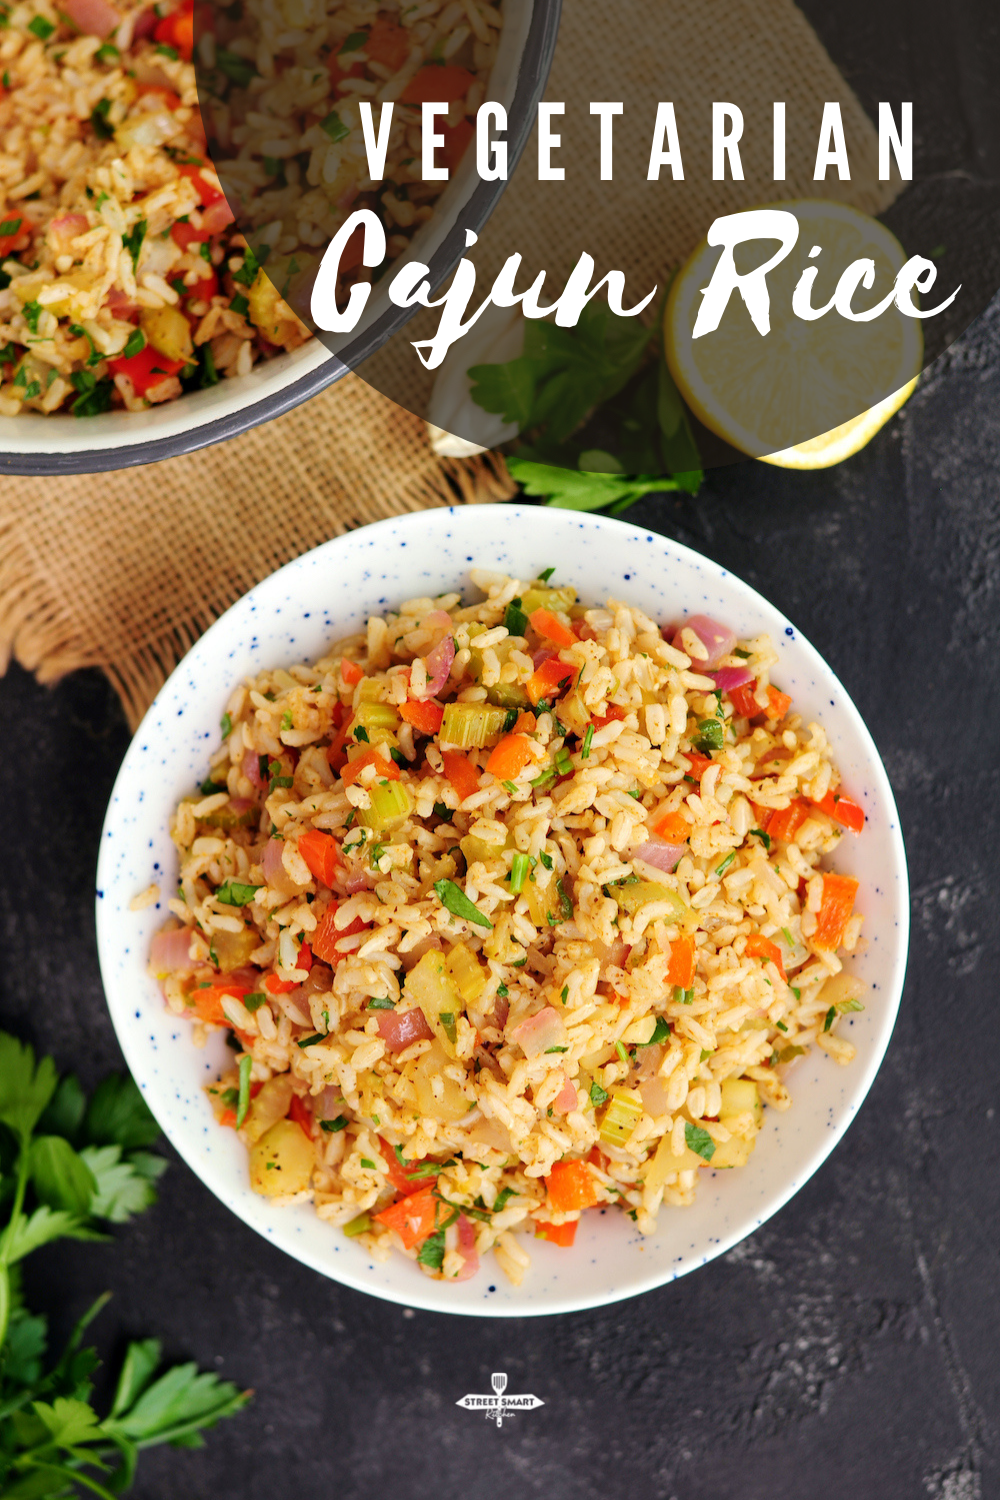 Vegetarian Cajun Rice (Meatless Dirty Rice) by StreetSmart Kitchen